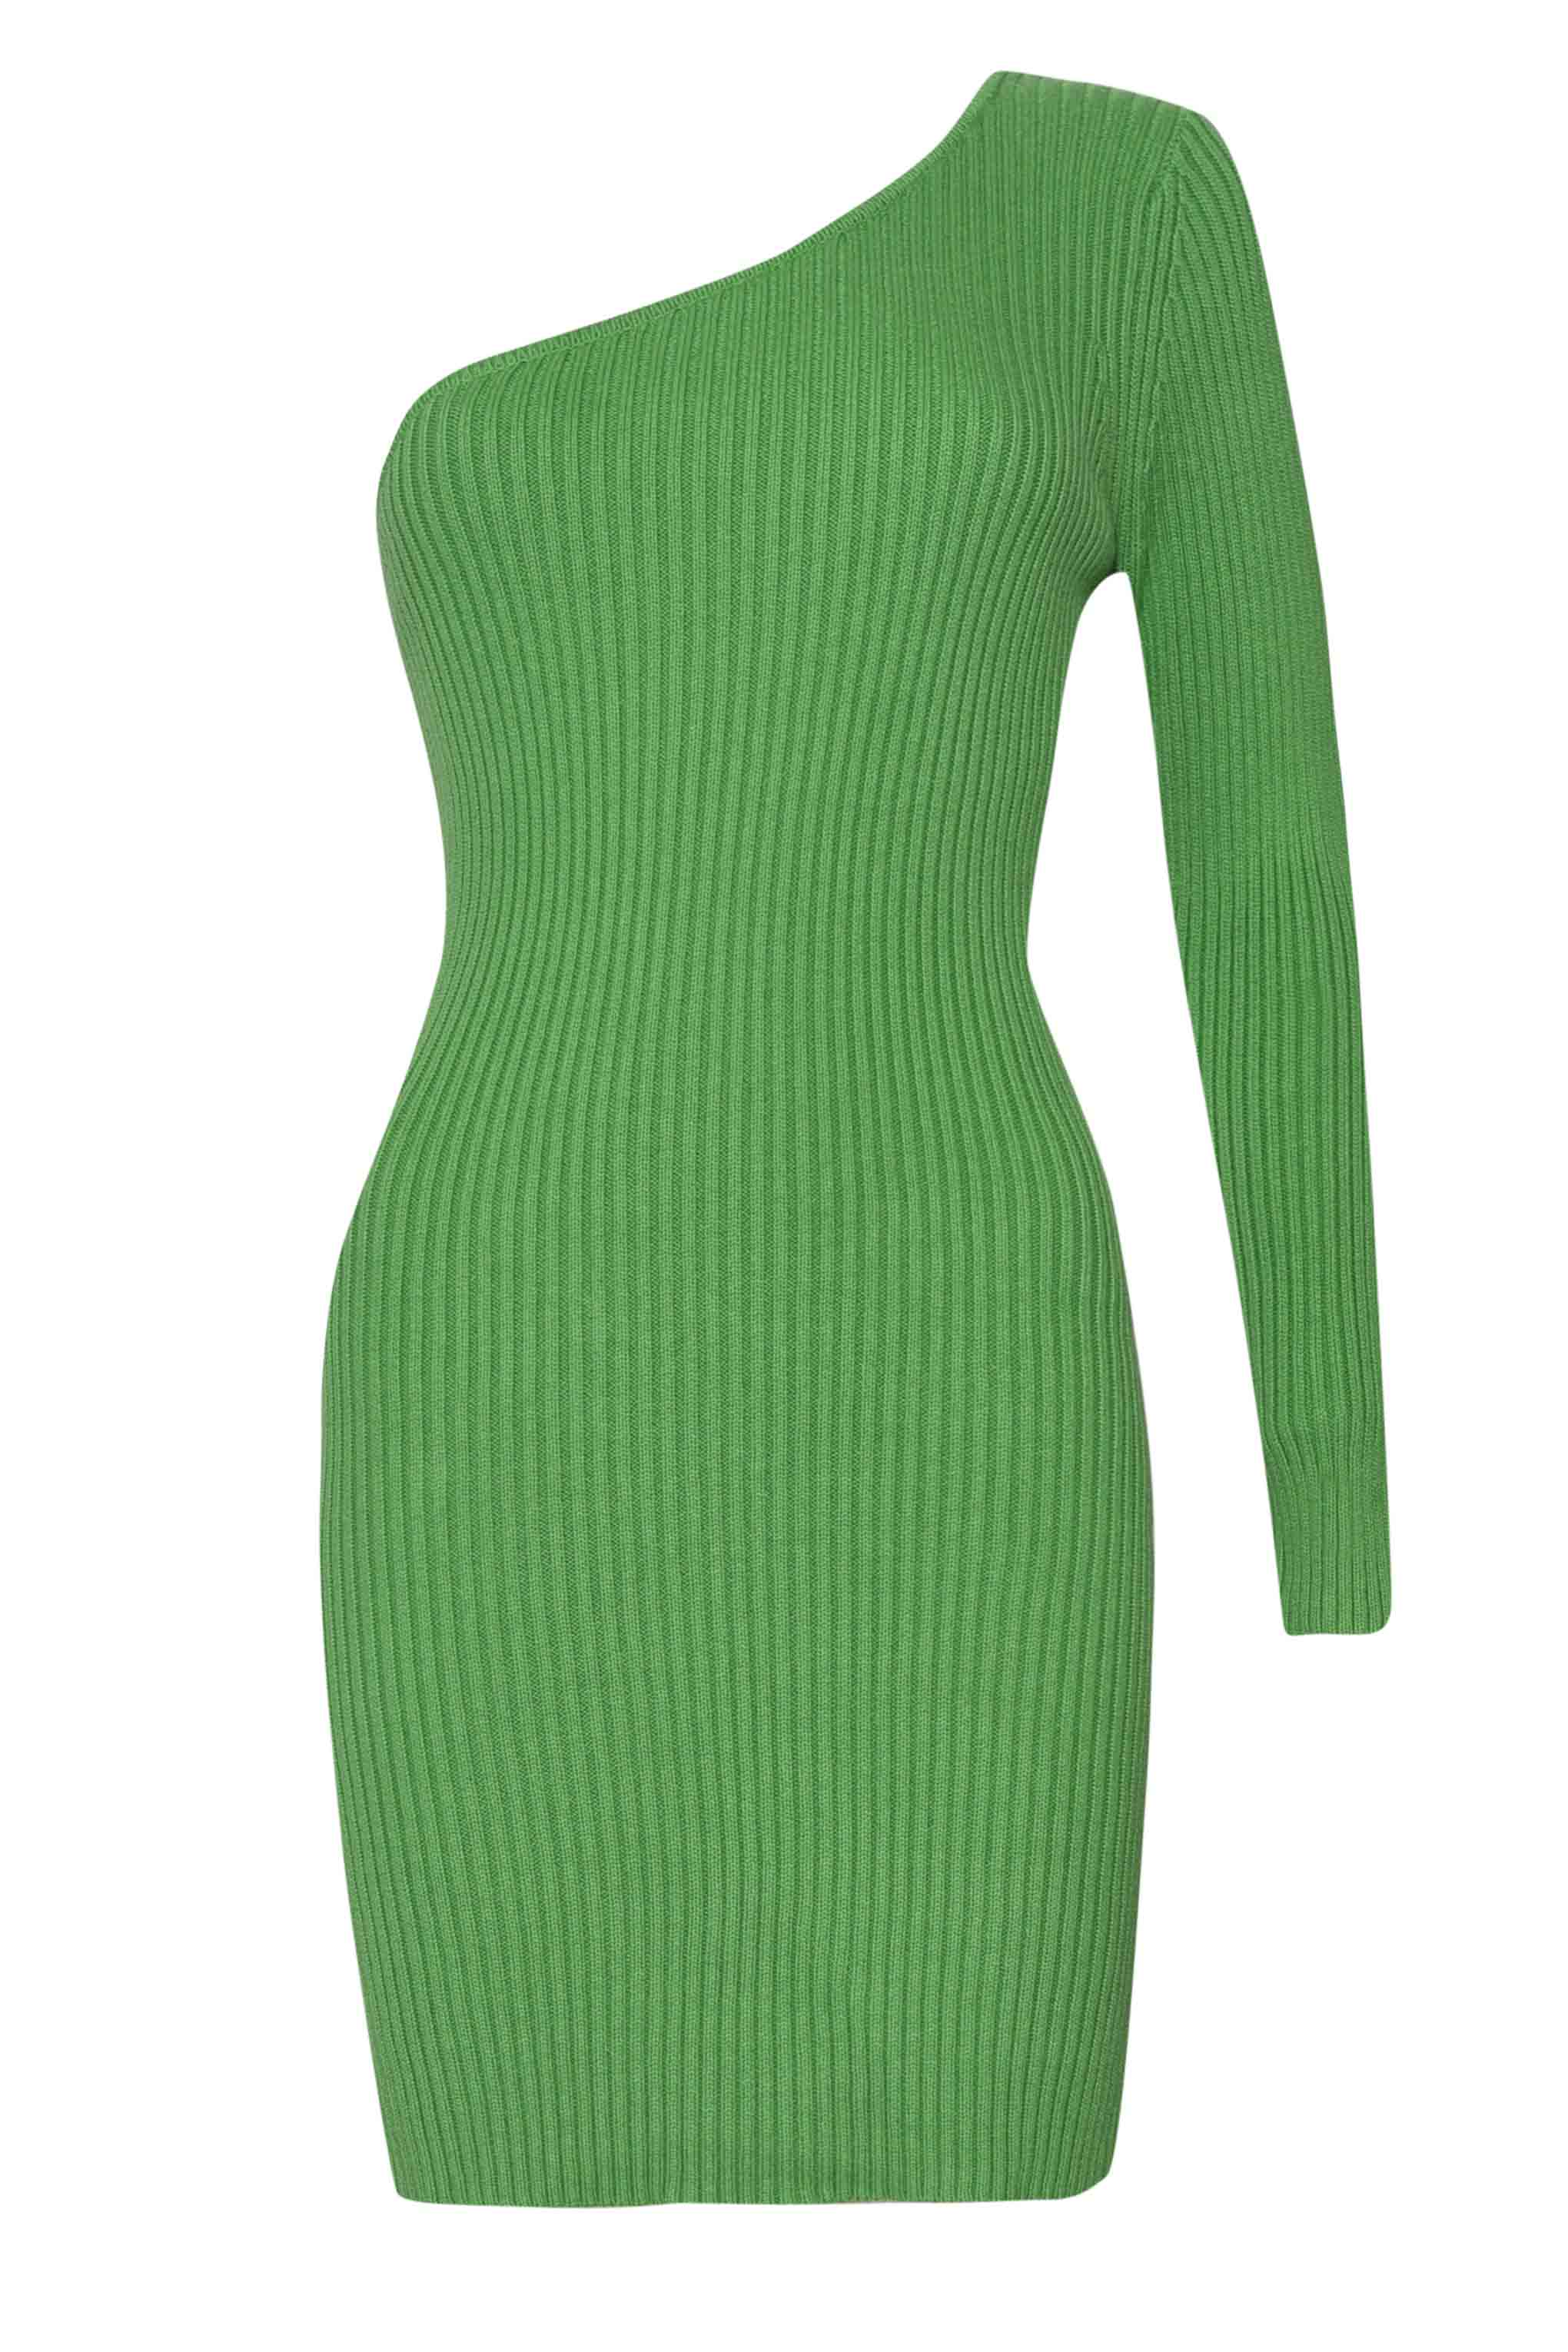 Glamorous Green Ribbed One Shoulder Long Sleeve Bodycon Mini Dress